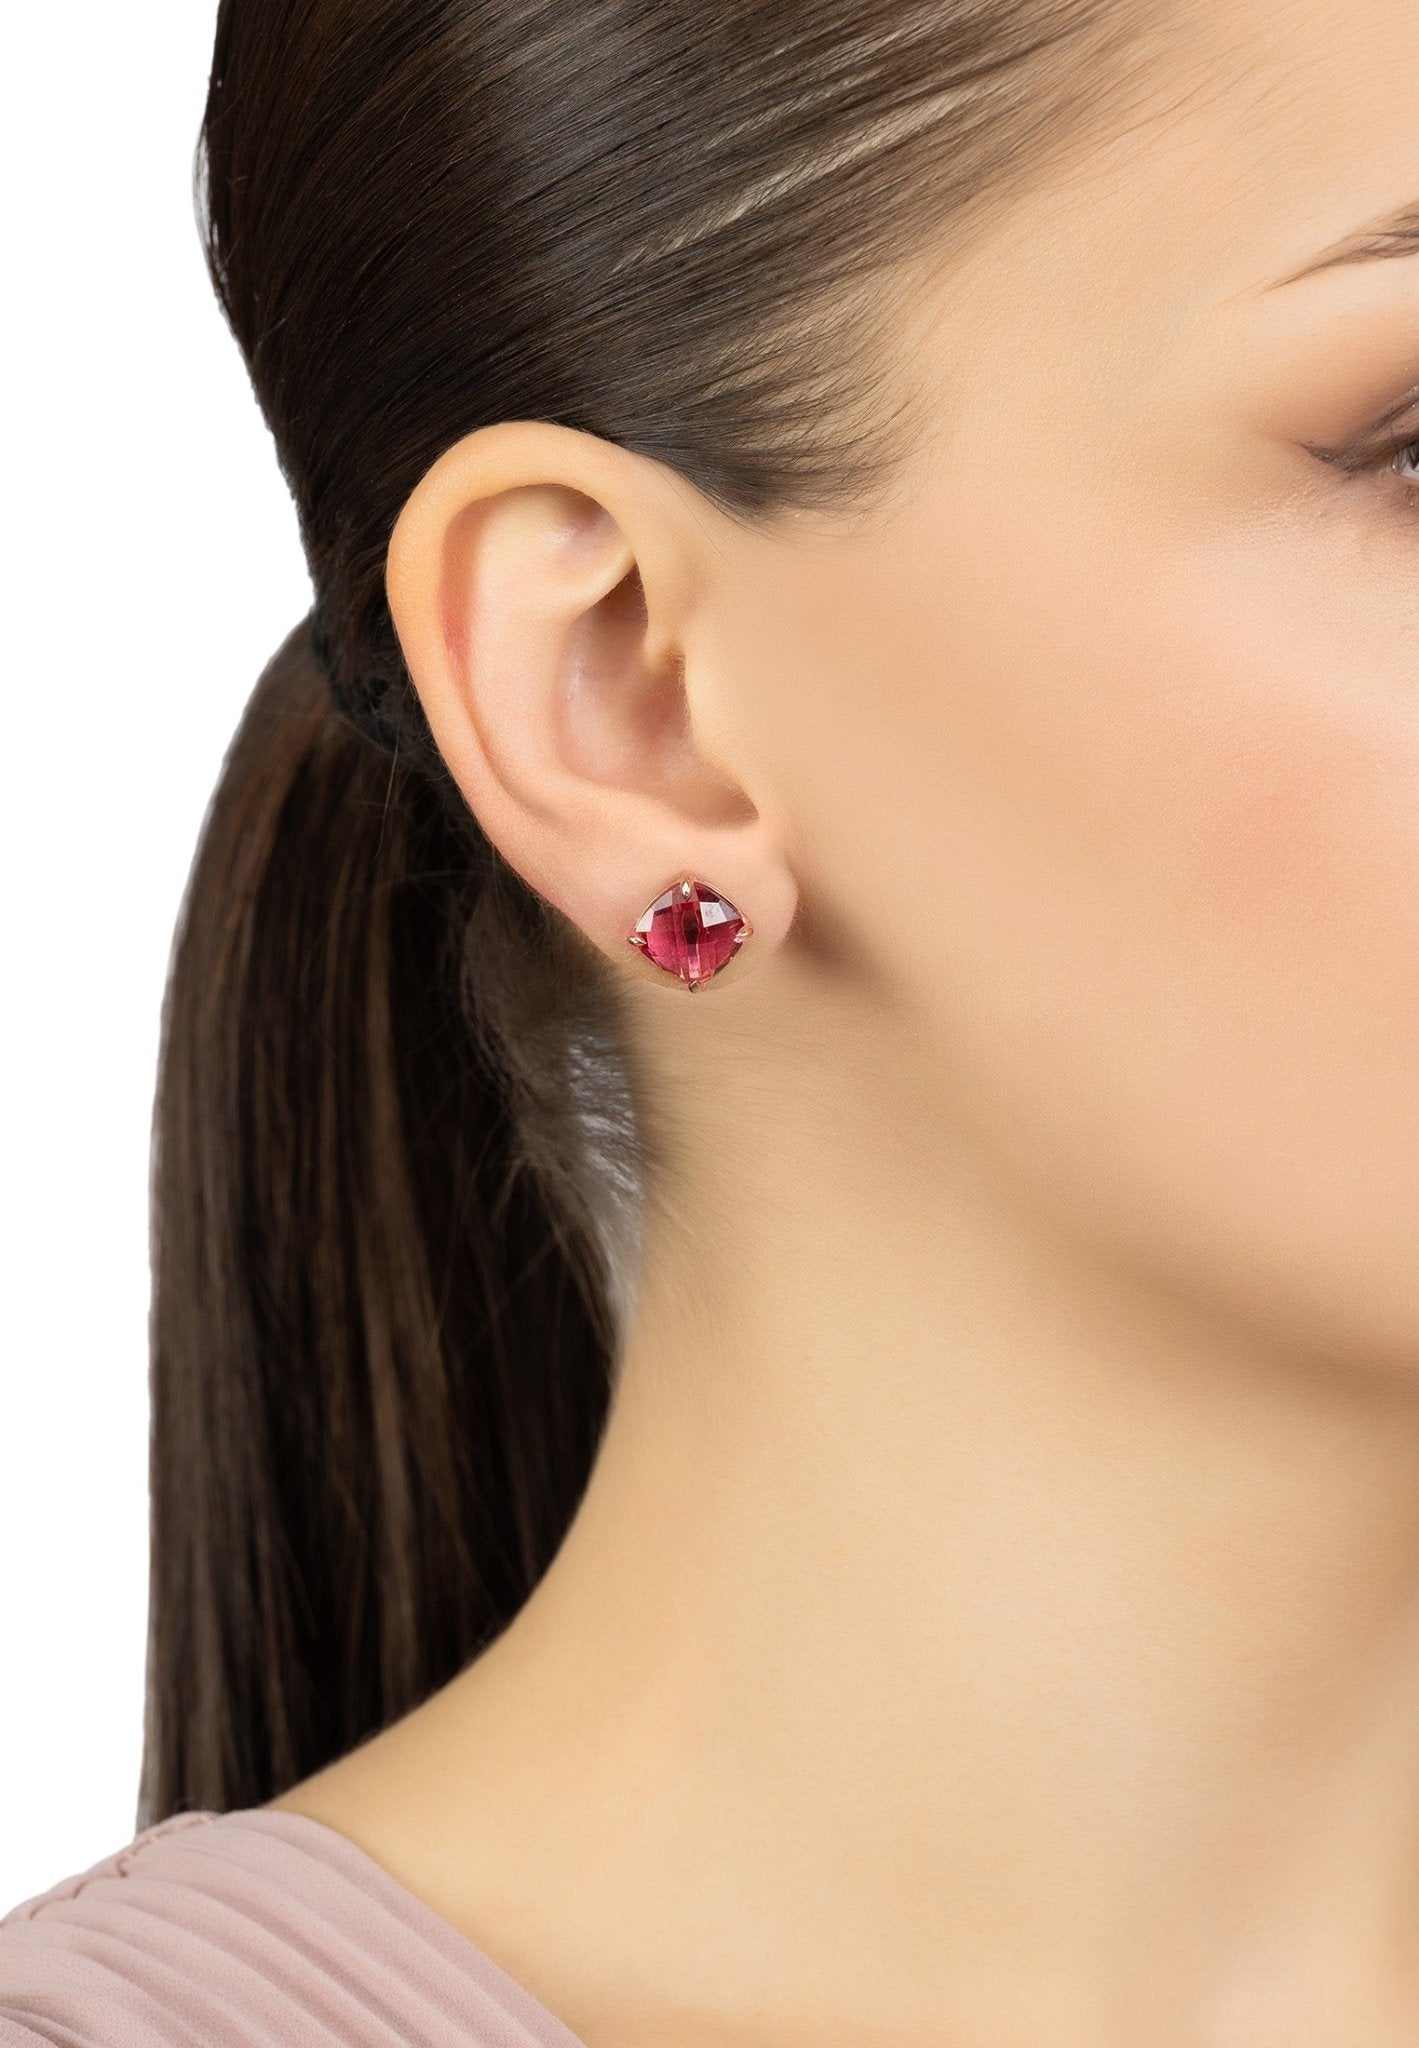 Empress Gemstone Stud Earrings Rosegold Pink Tourmaline - LATELITA Earrings